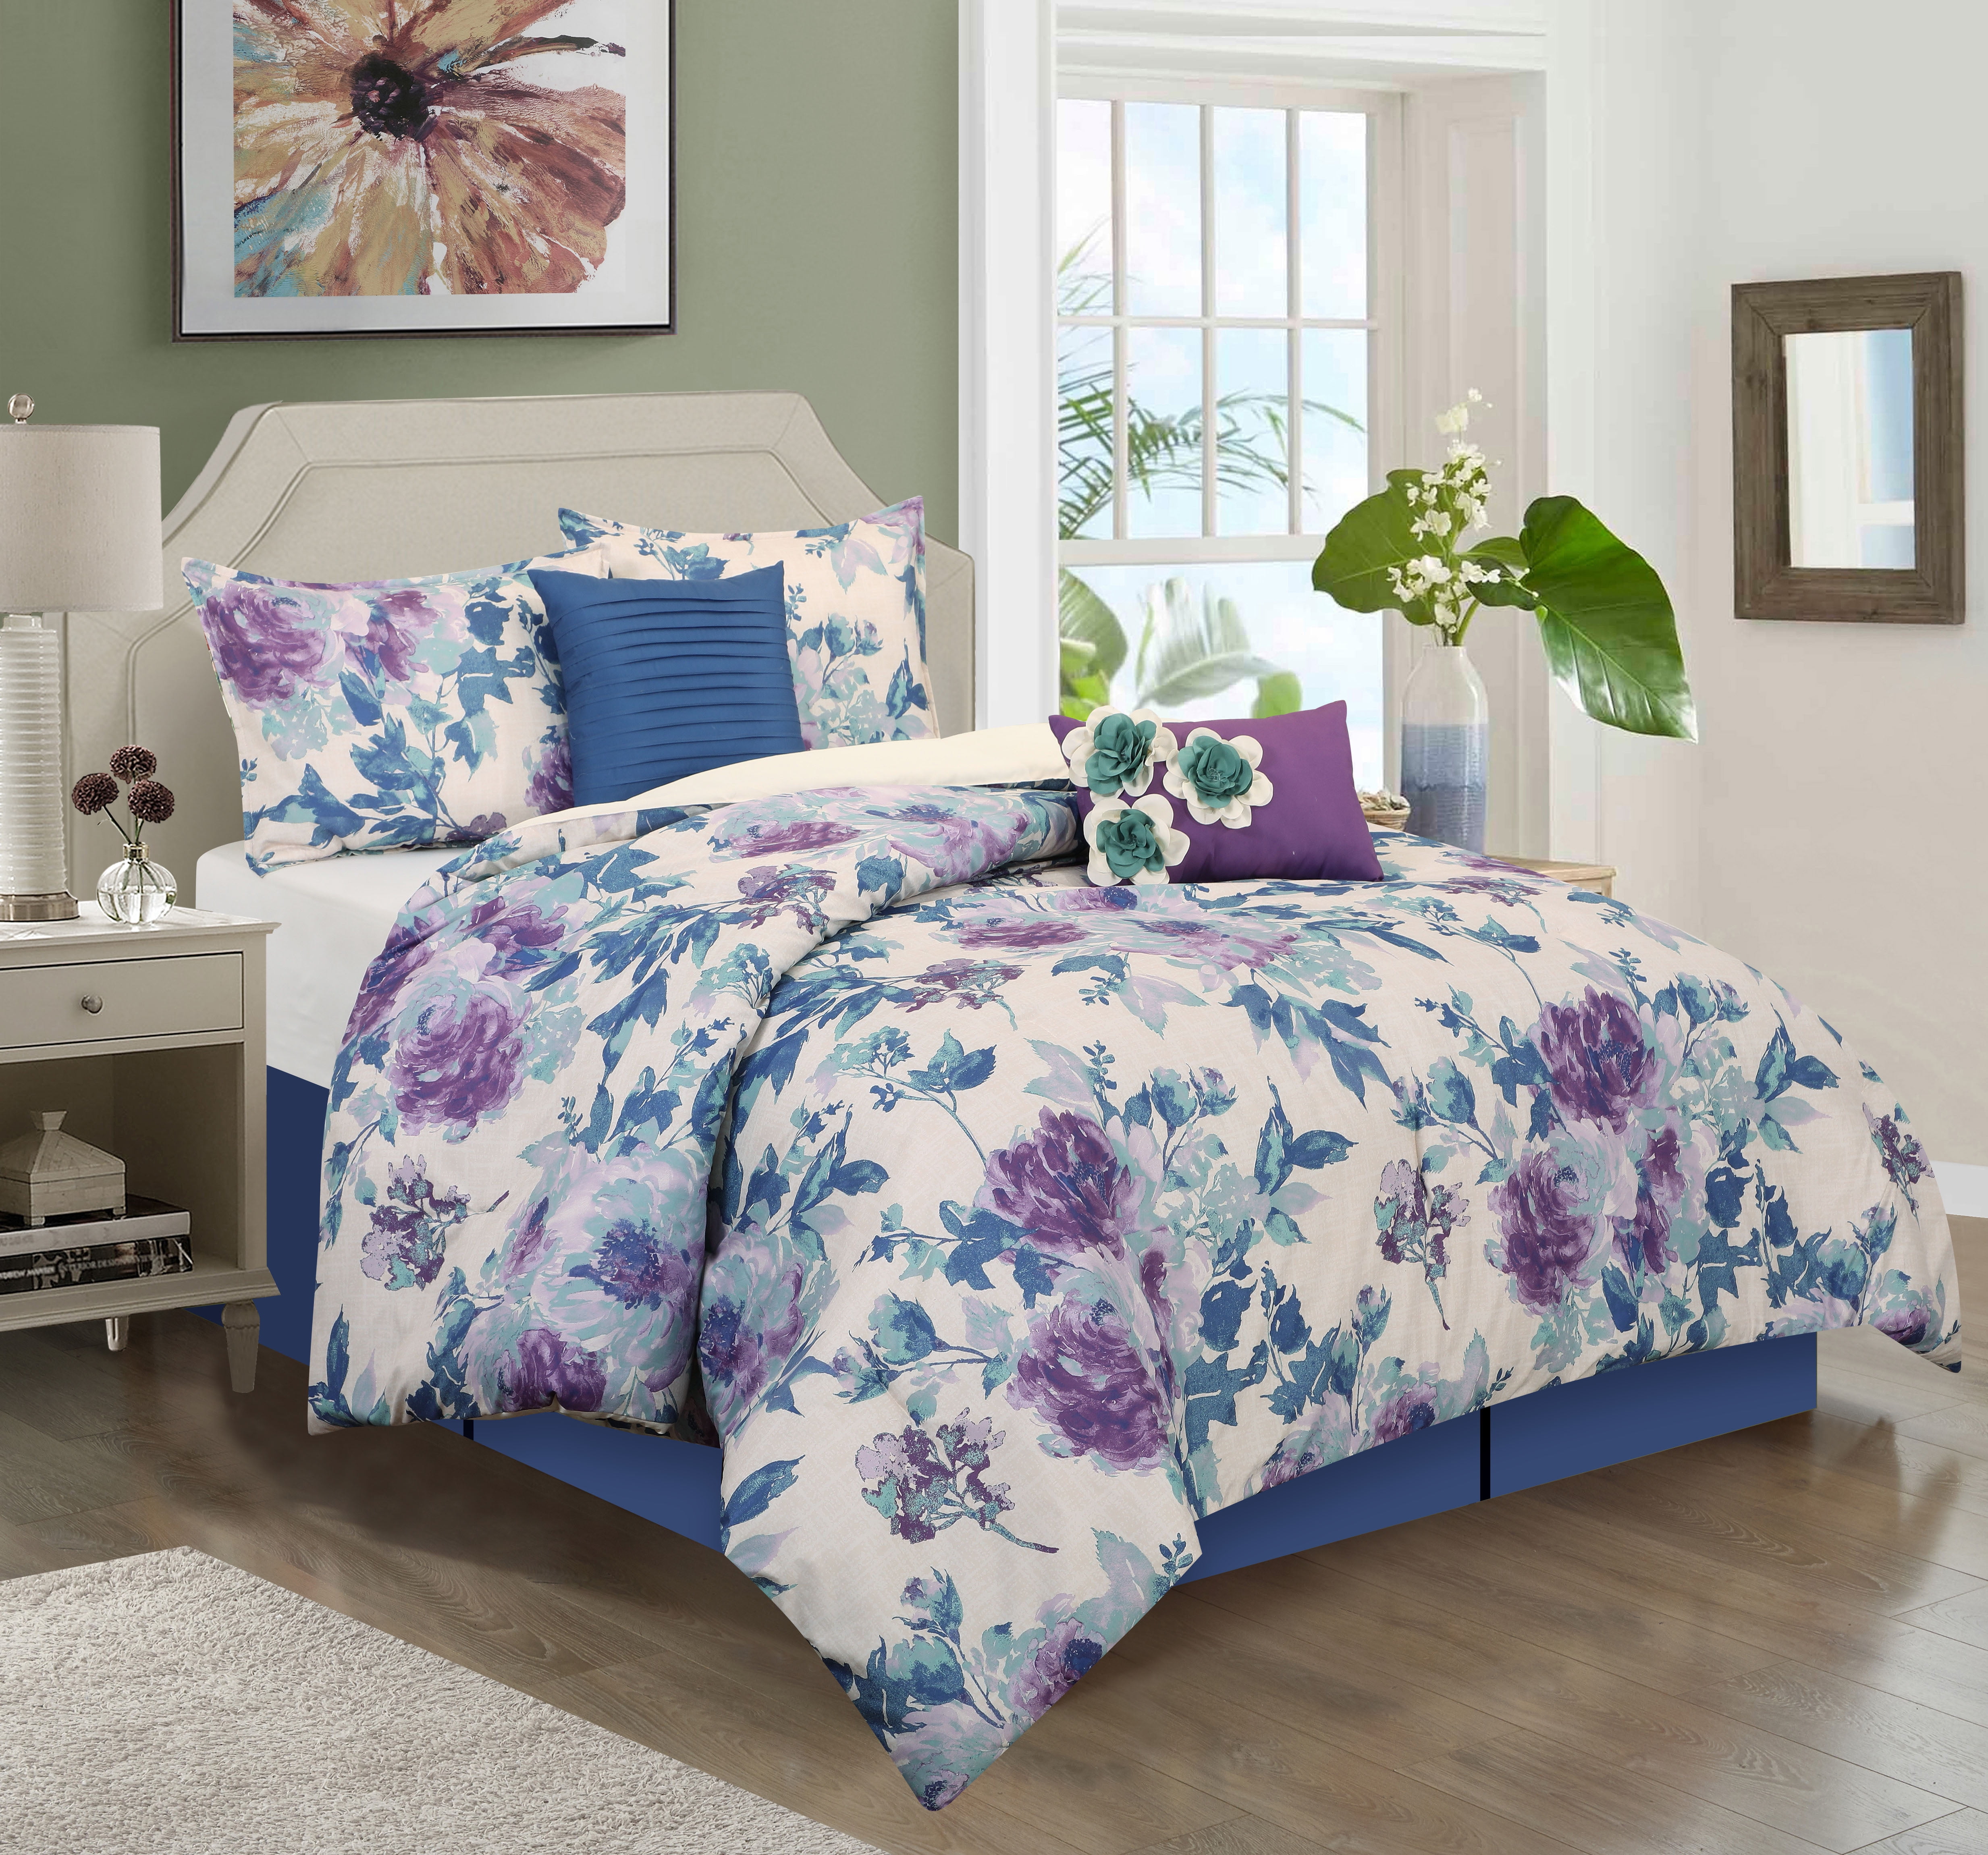 Lanco Ella Floral 7-Piece Reversible Comforter Set, King, Multi-Colored,  Fill Polyester 